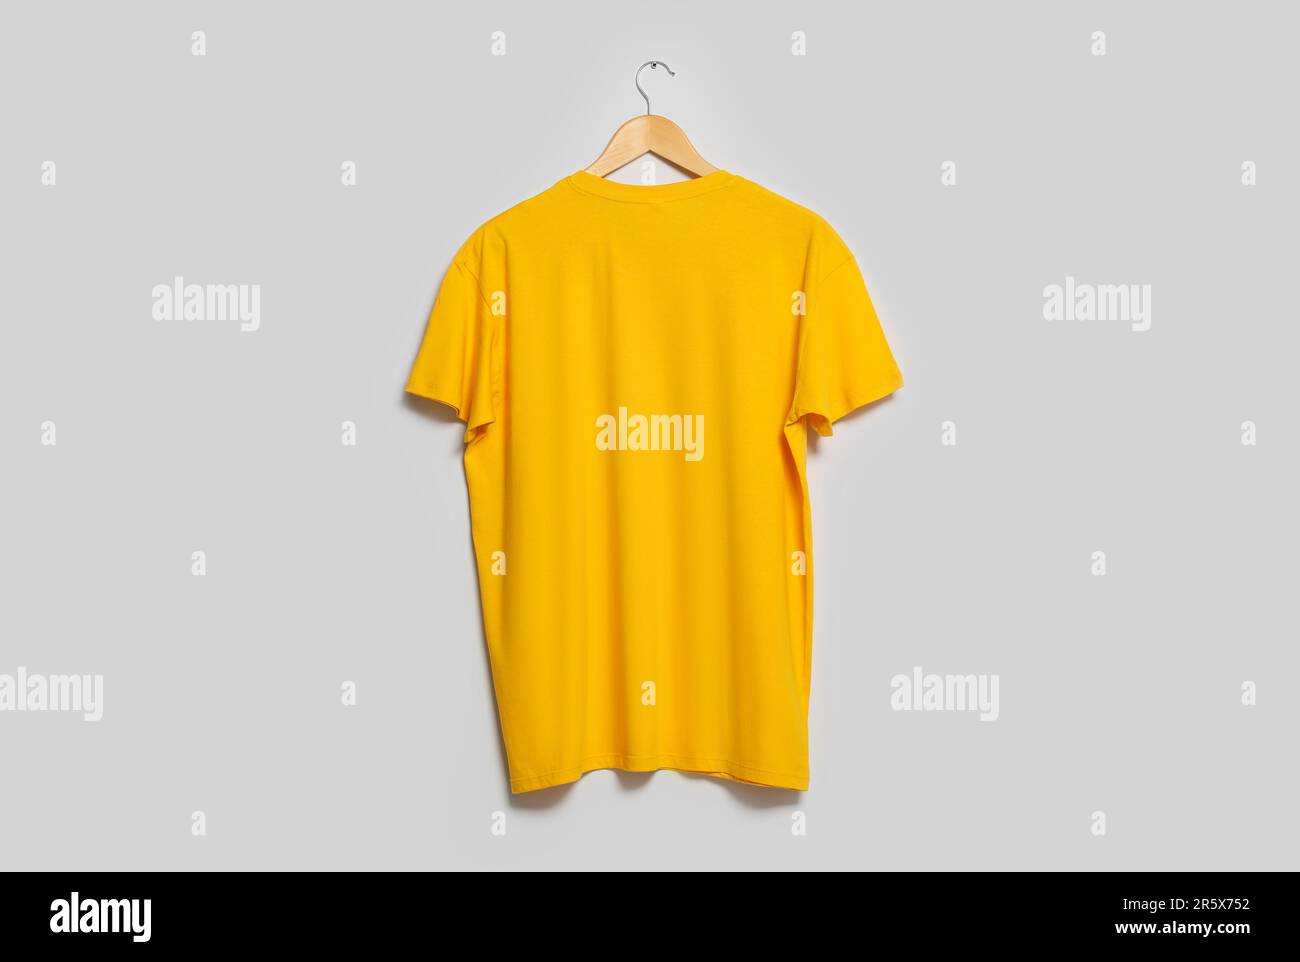 https://c8.alamy.com/comp/2R5X752/hanger-with-yellow-t-shirt-on-light-wall-mockup-for-design-2R5X752.jpg